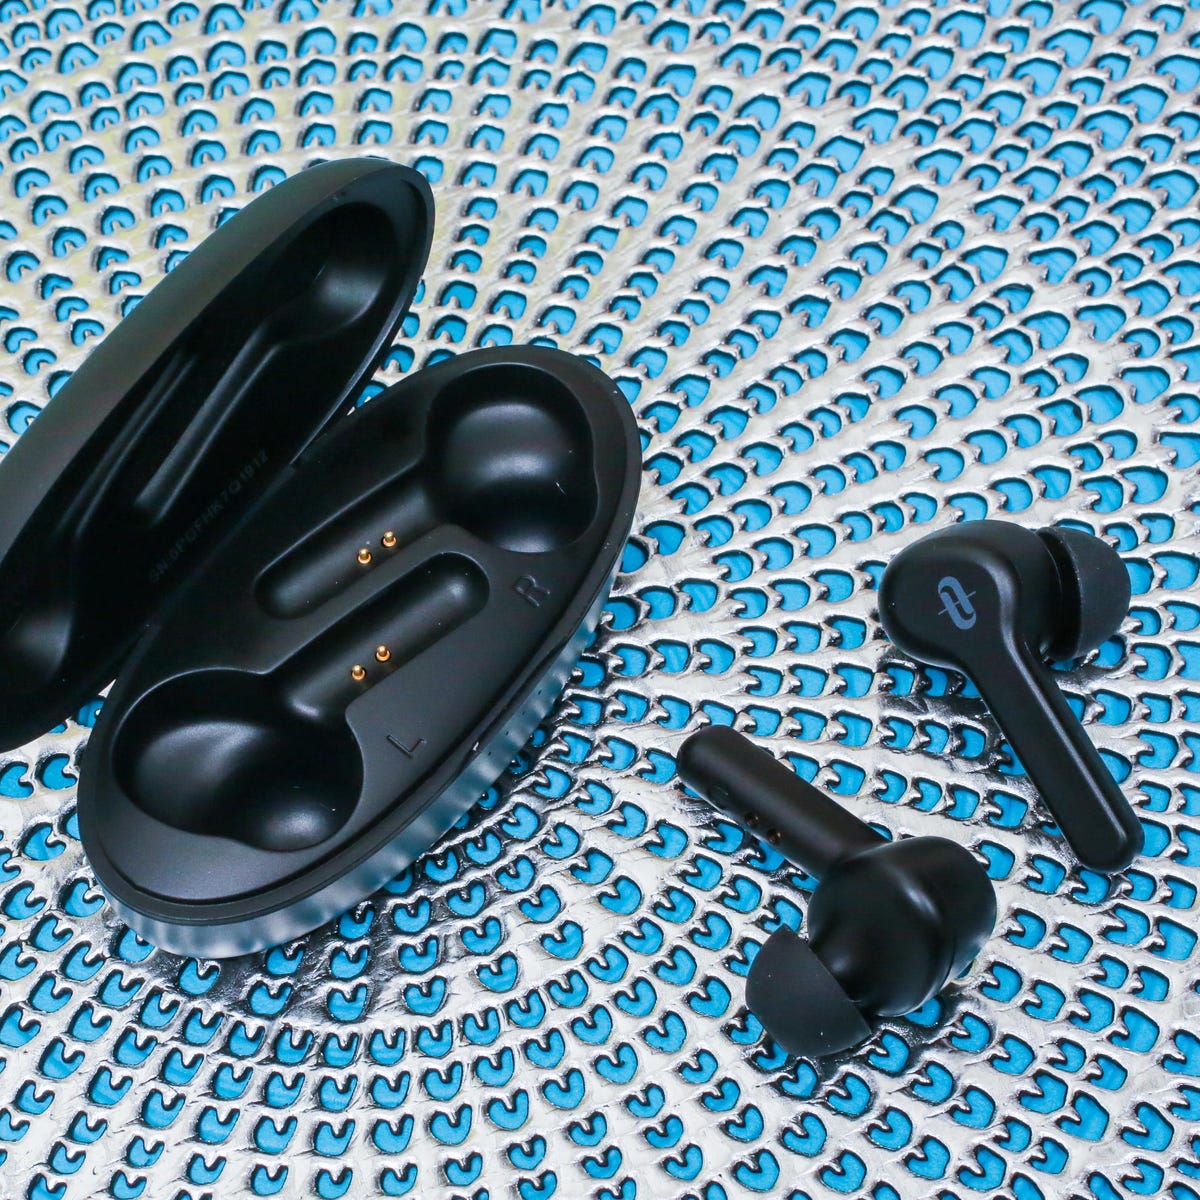 TaoTronics TWS TT-BH053 review: True wireless earphones on the cheap - CNET